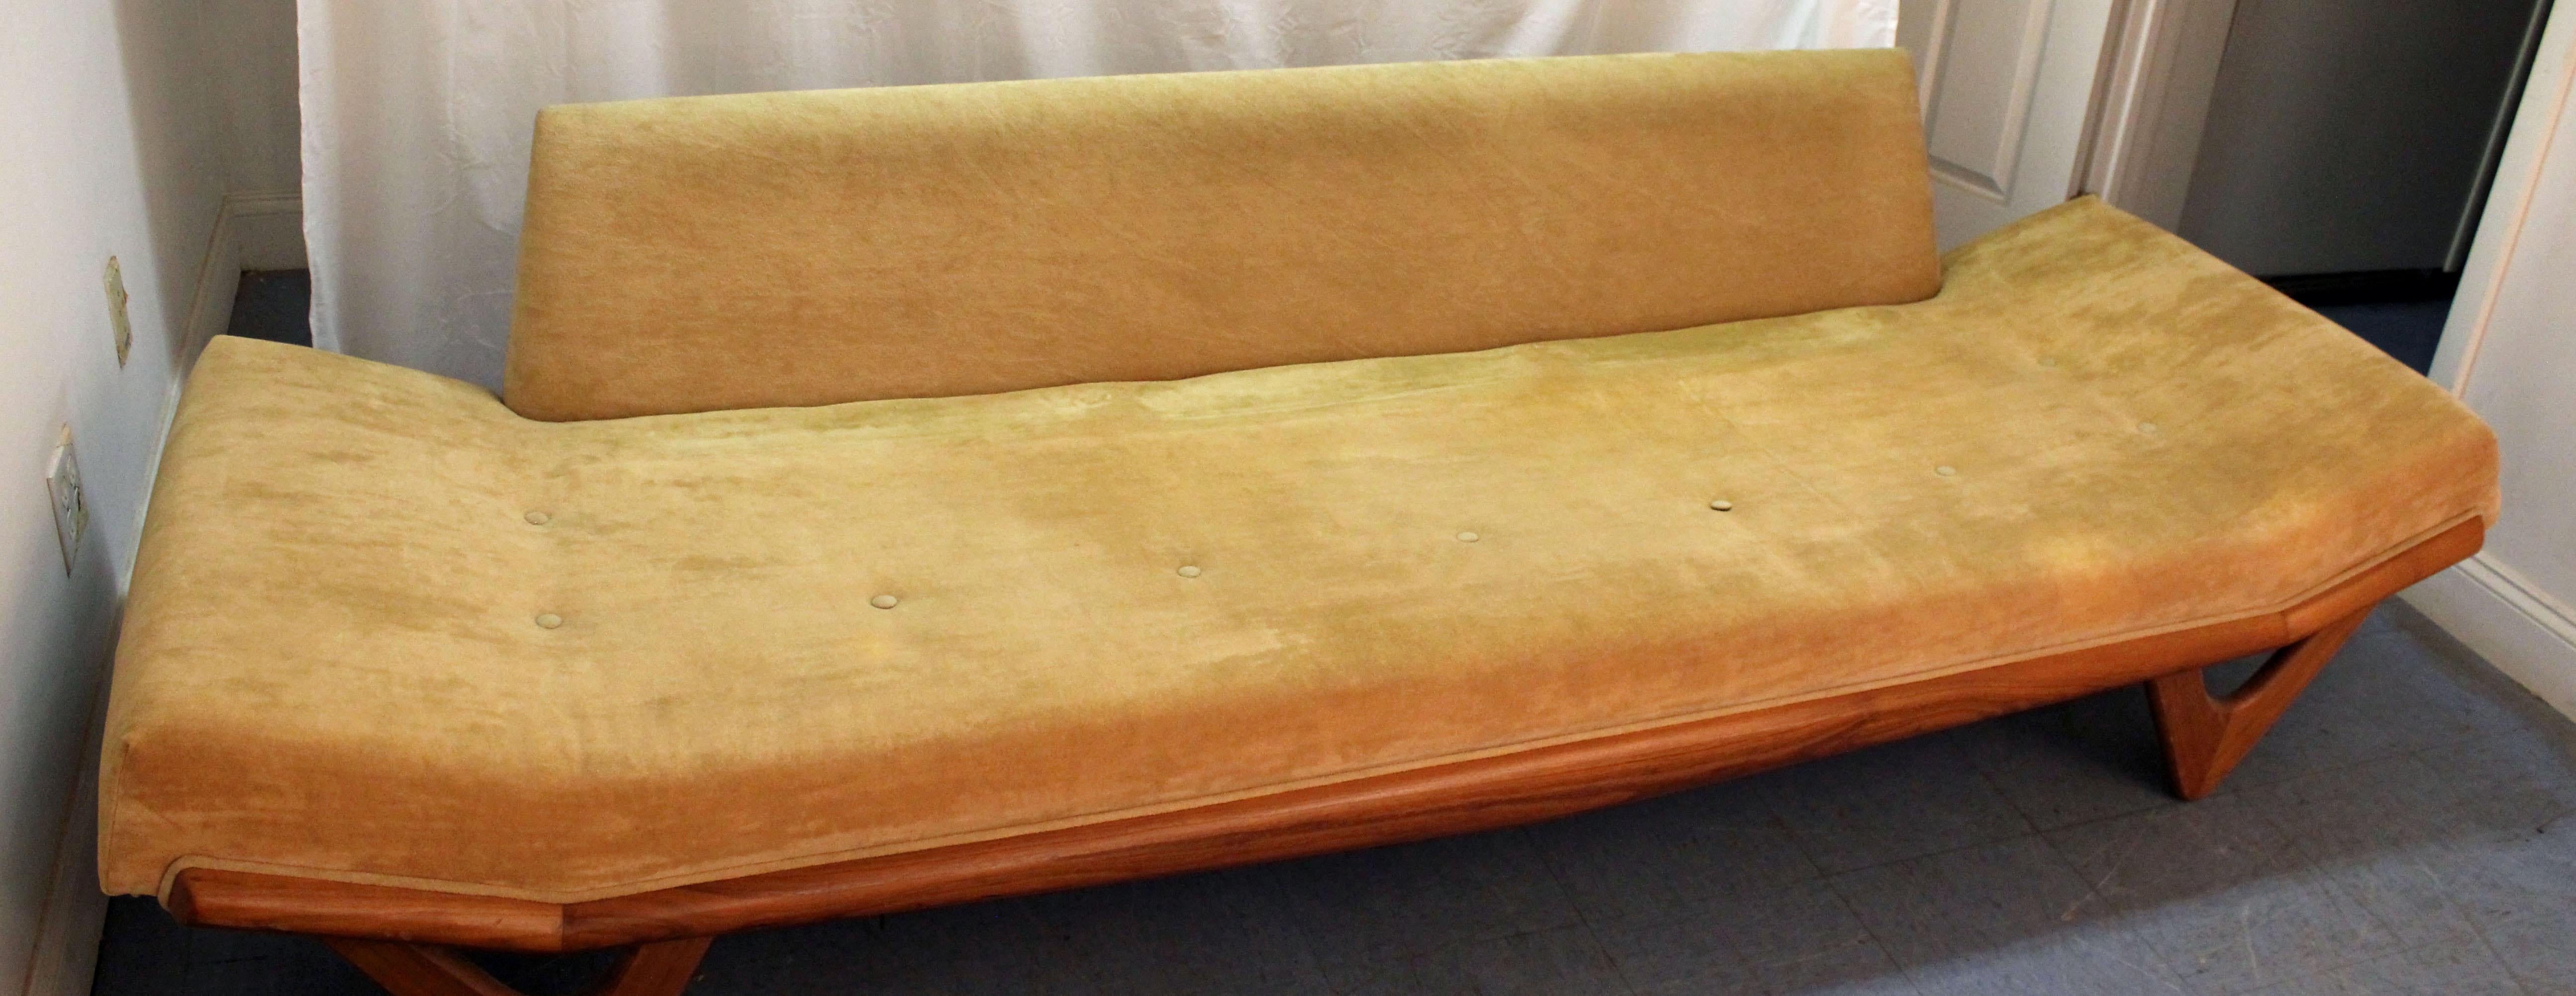 adrian pearsall boomerang sofa